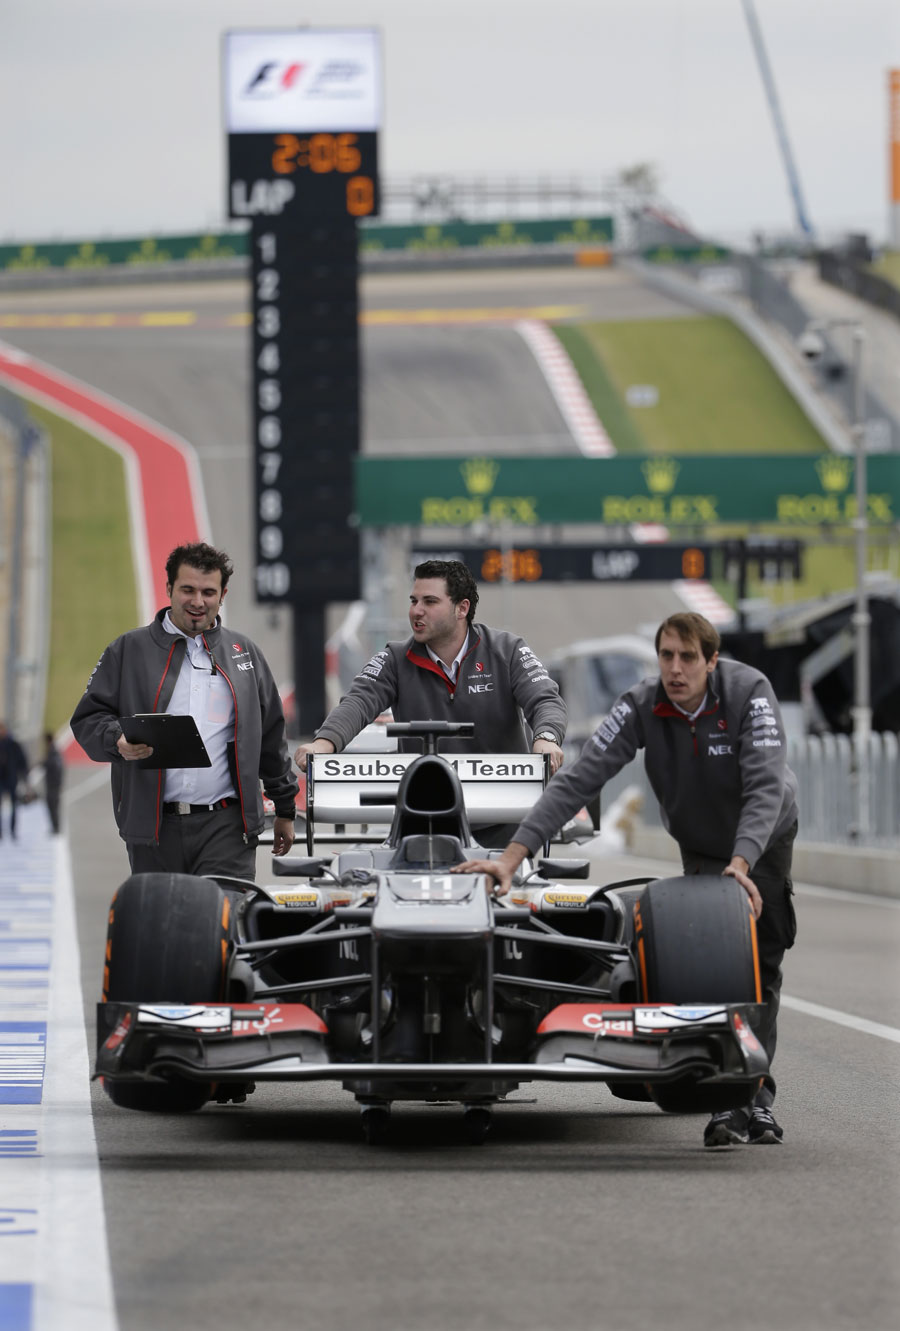 Sauber mechanics return Nico Hulkenberg's car from scrutineering